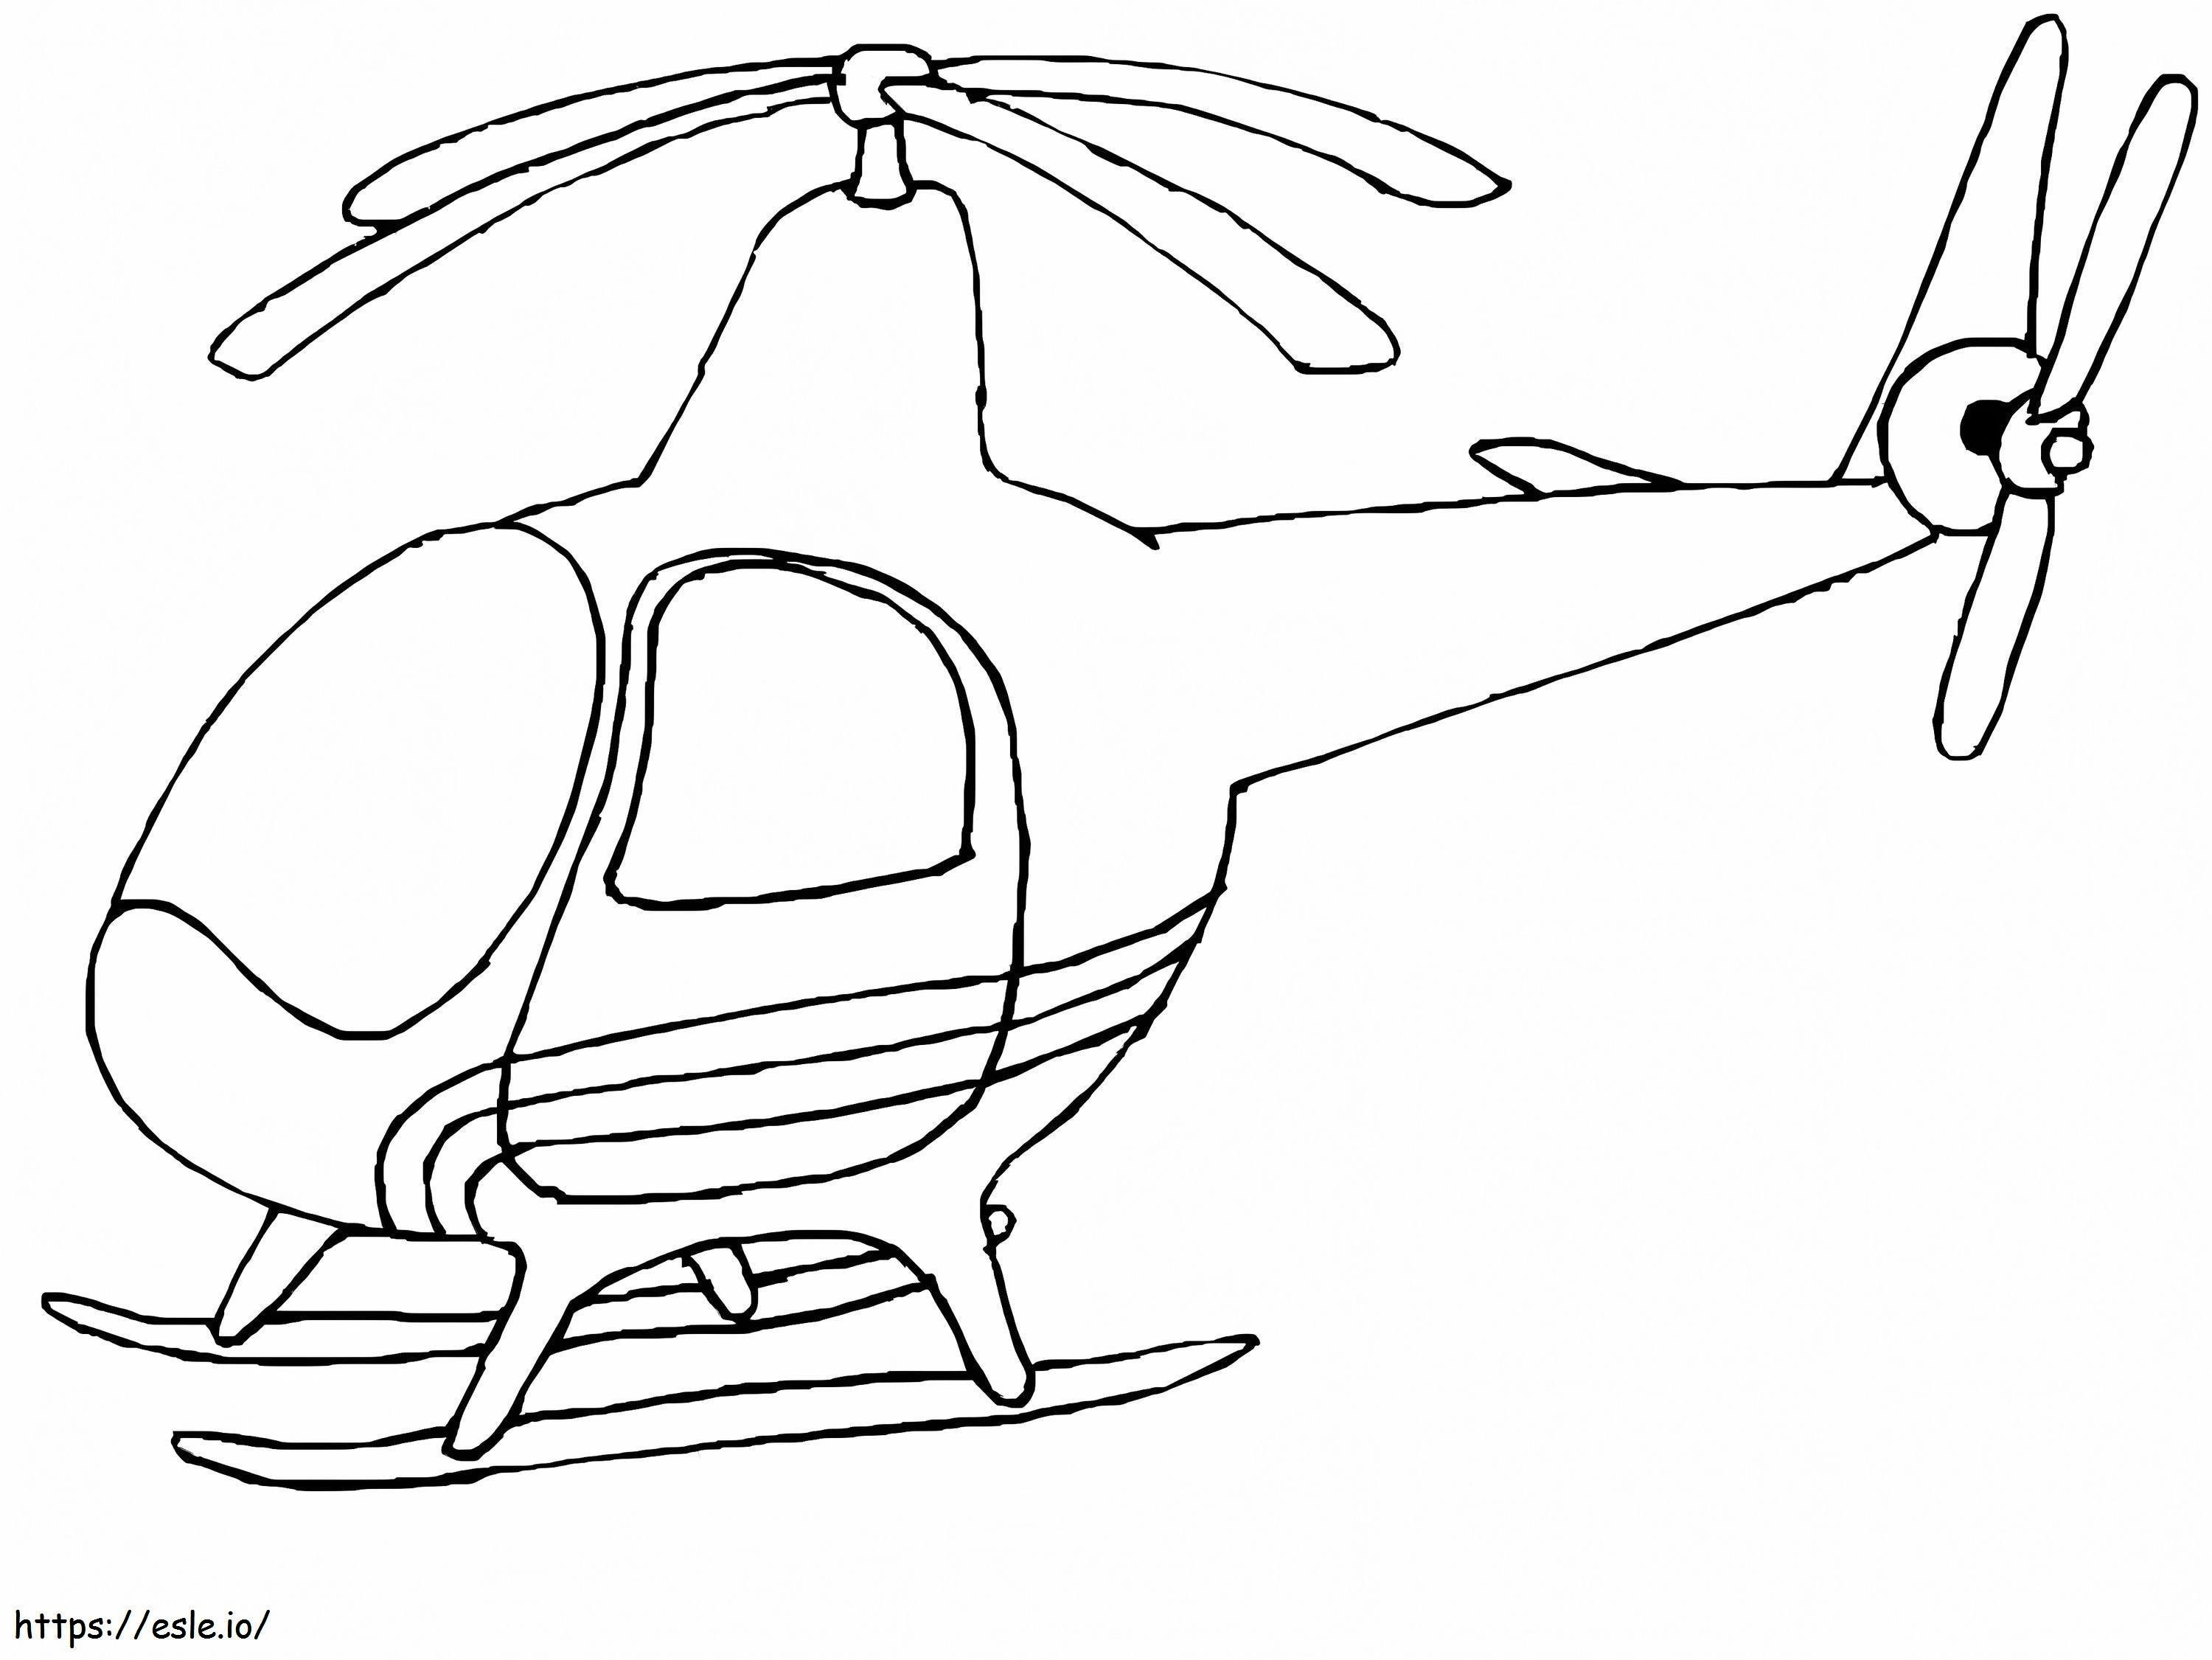 Normale helikopter 2 kleurplaat kleurplaat